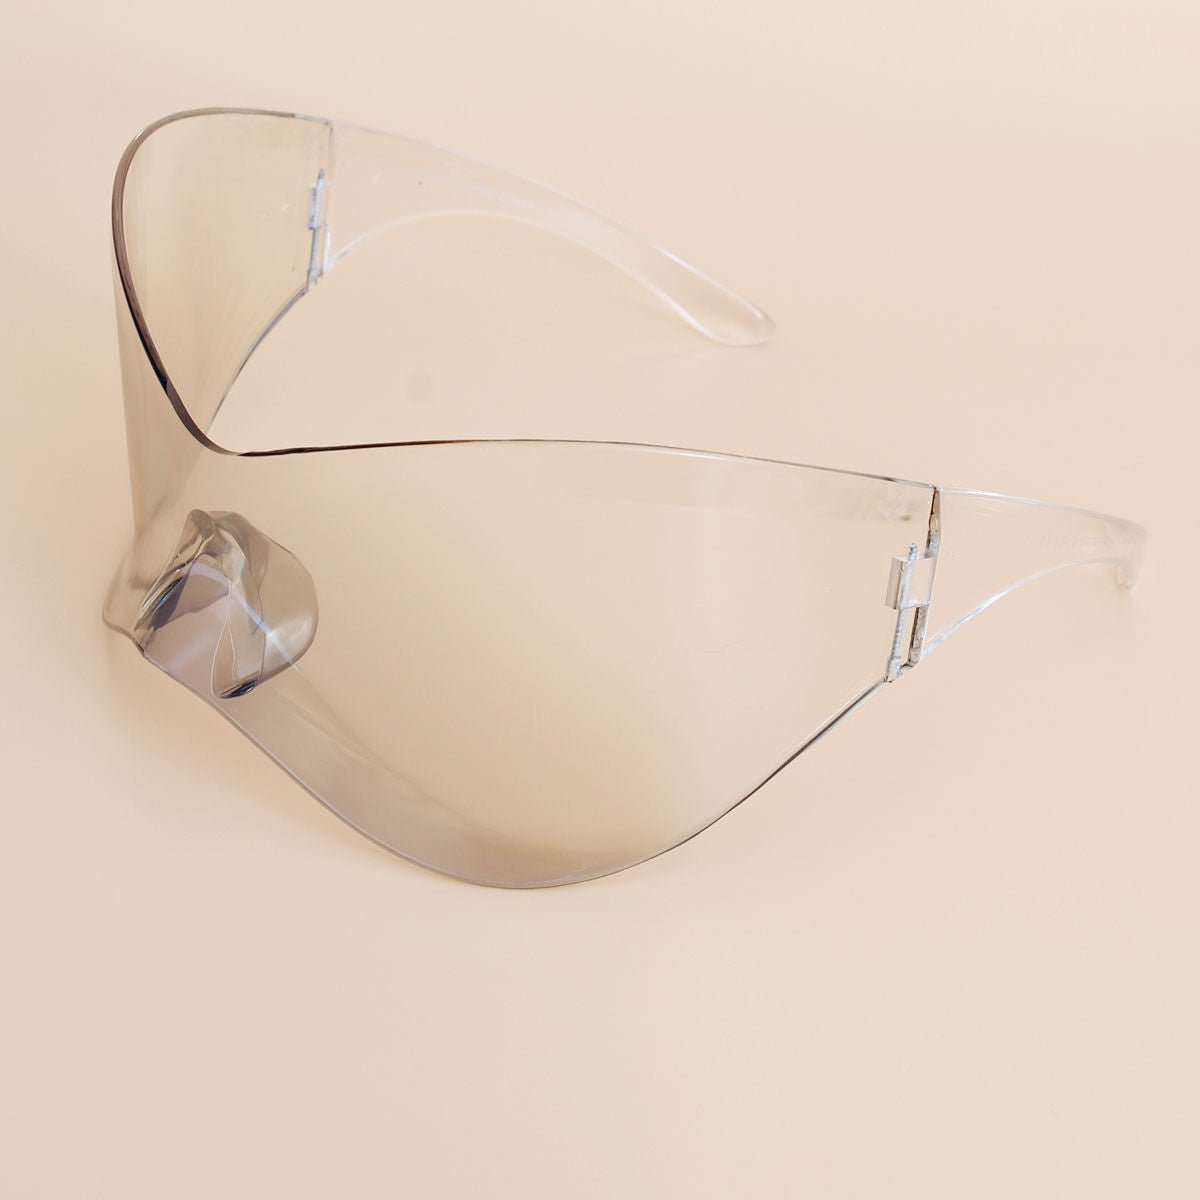 Sunglasses Mask Wrap Clear Eyewear for Women - Bae Apparel